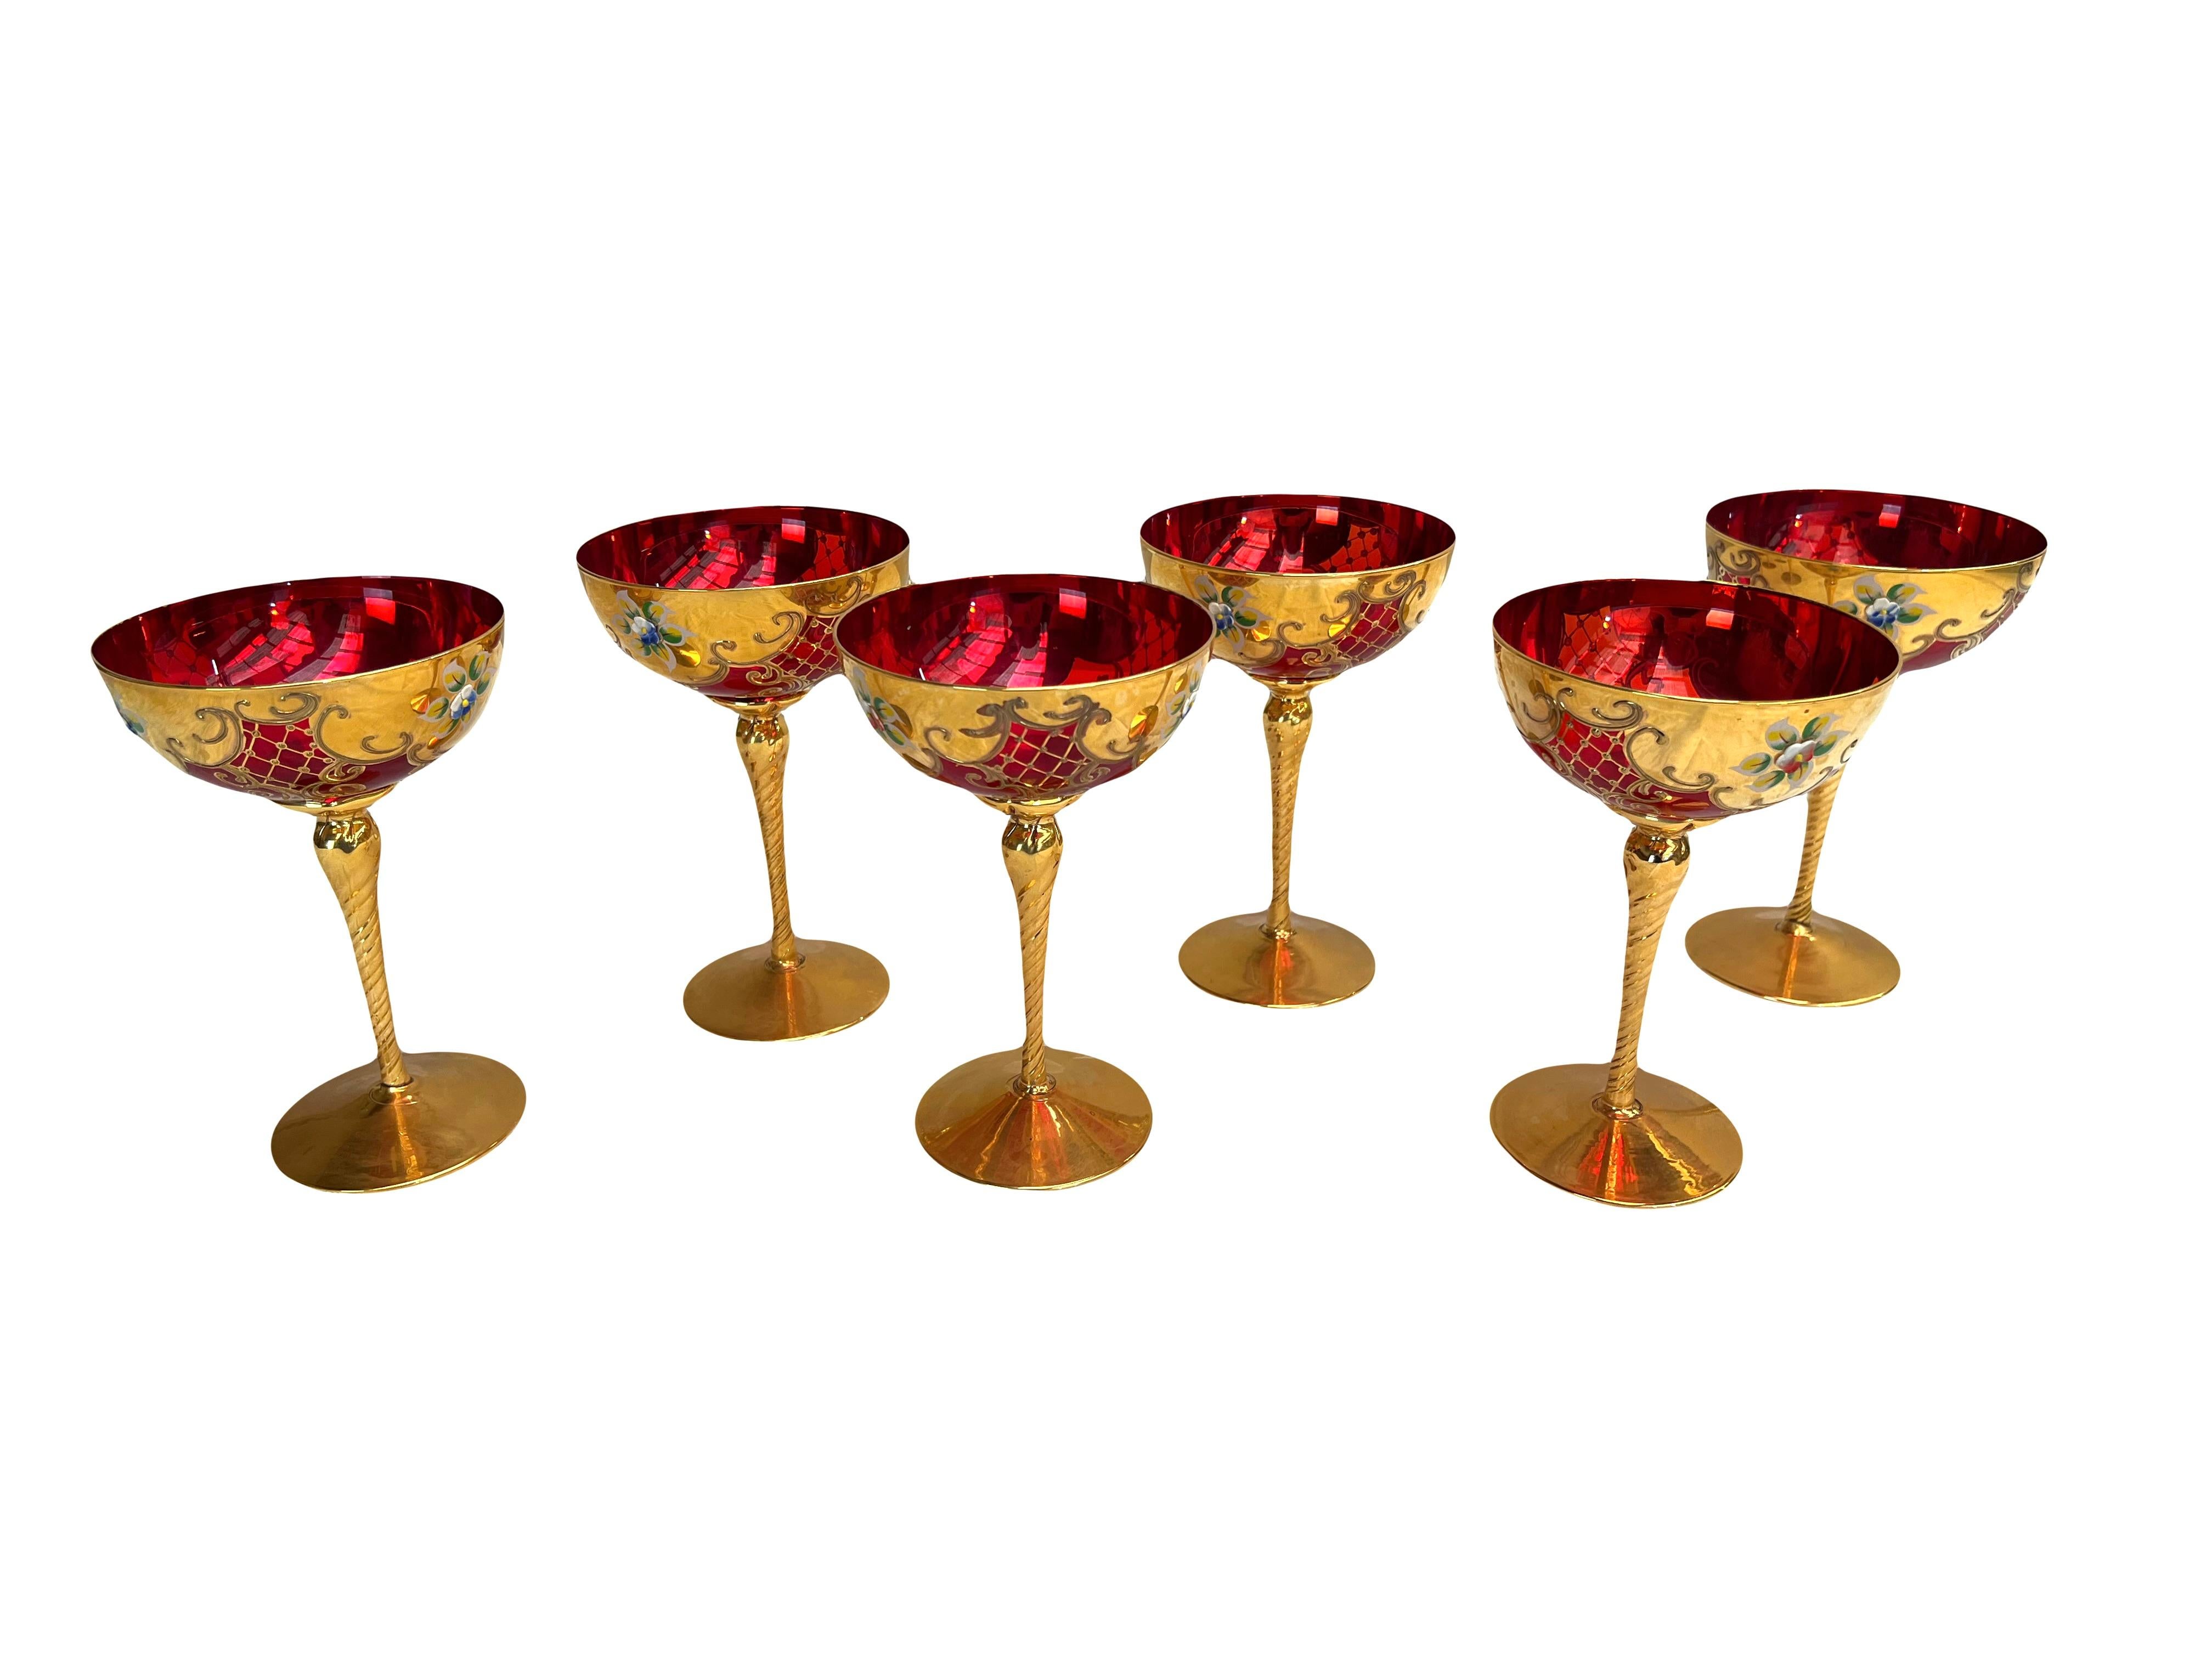 1960s champagne glasses